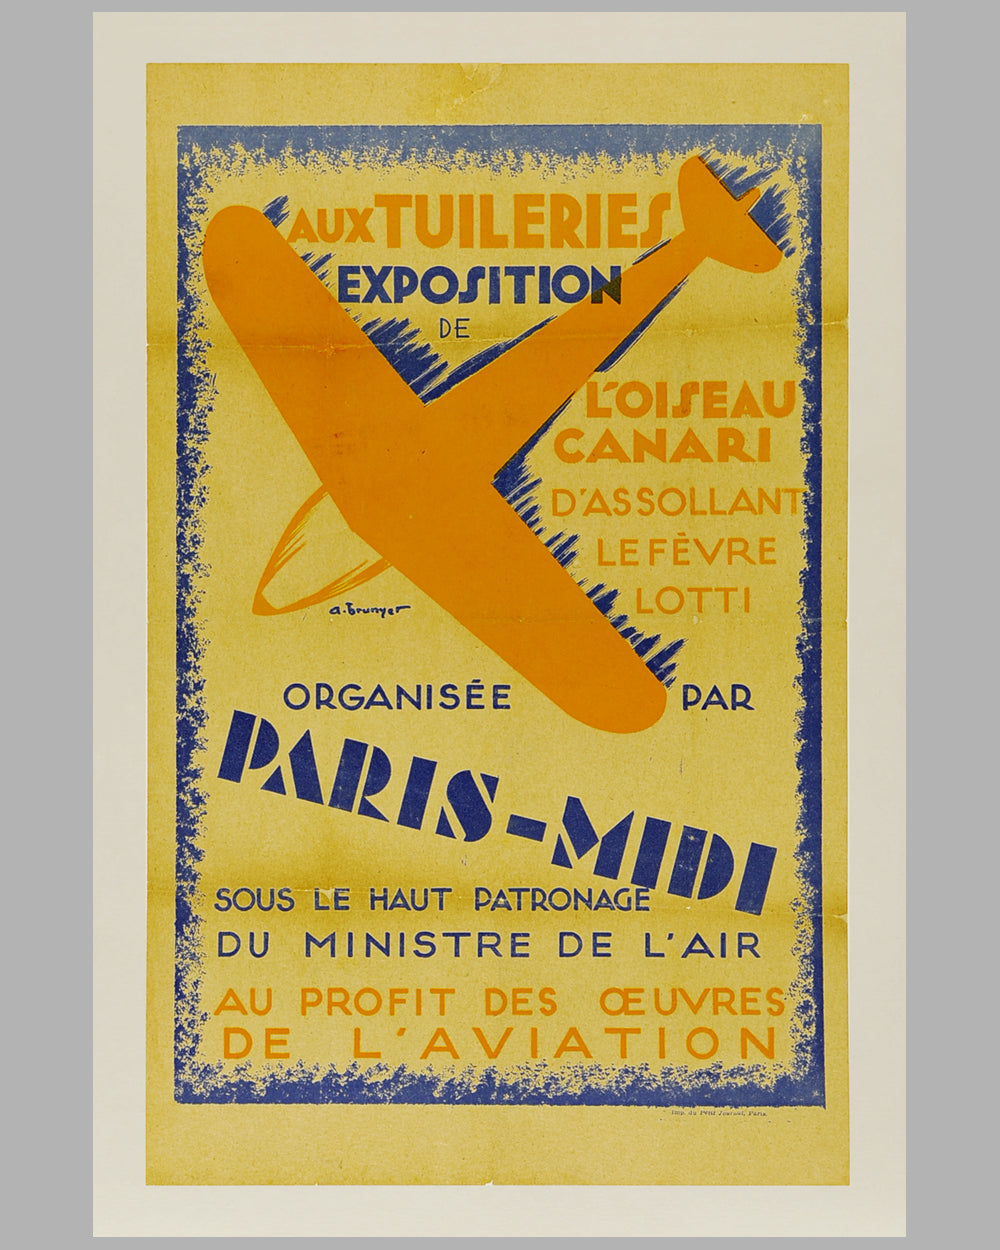 Exposition de l’Oiseau Canari original poster by Abel Brunyer, late 1920's